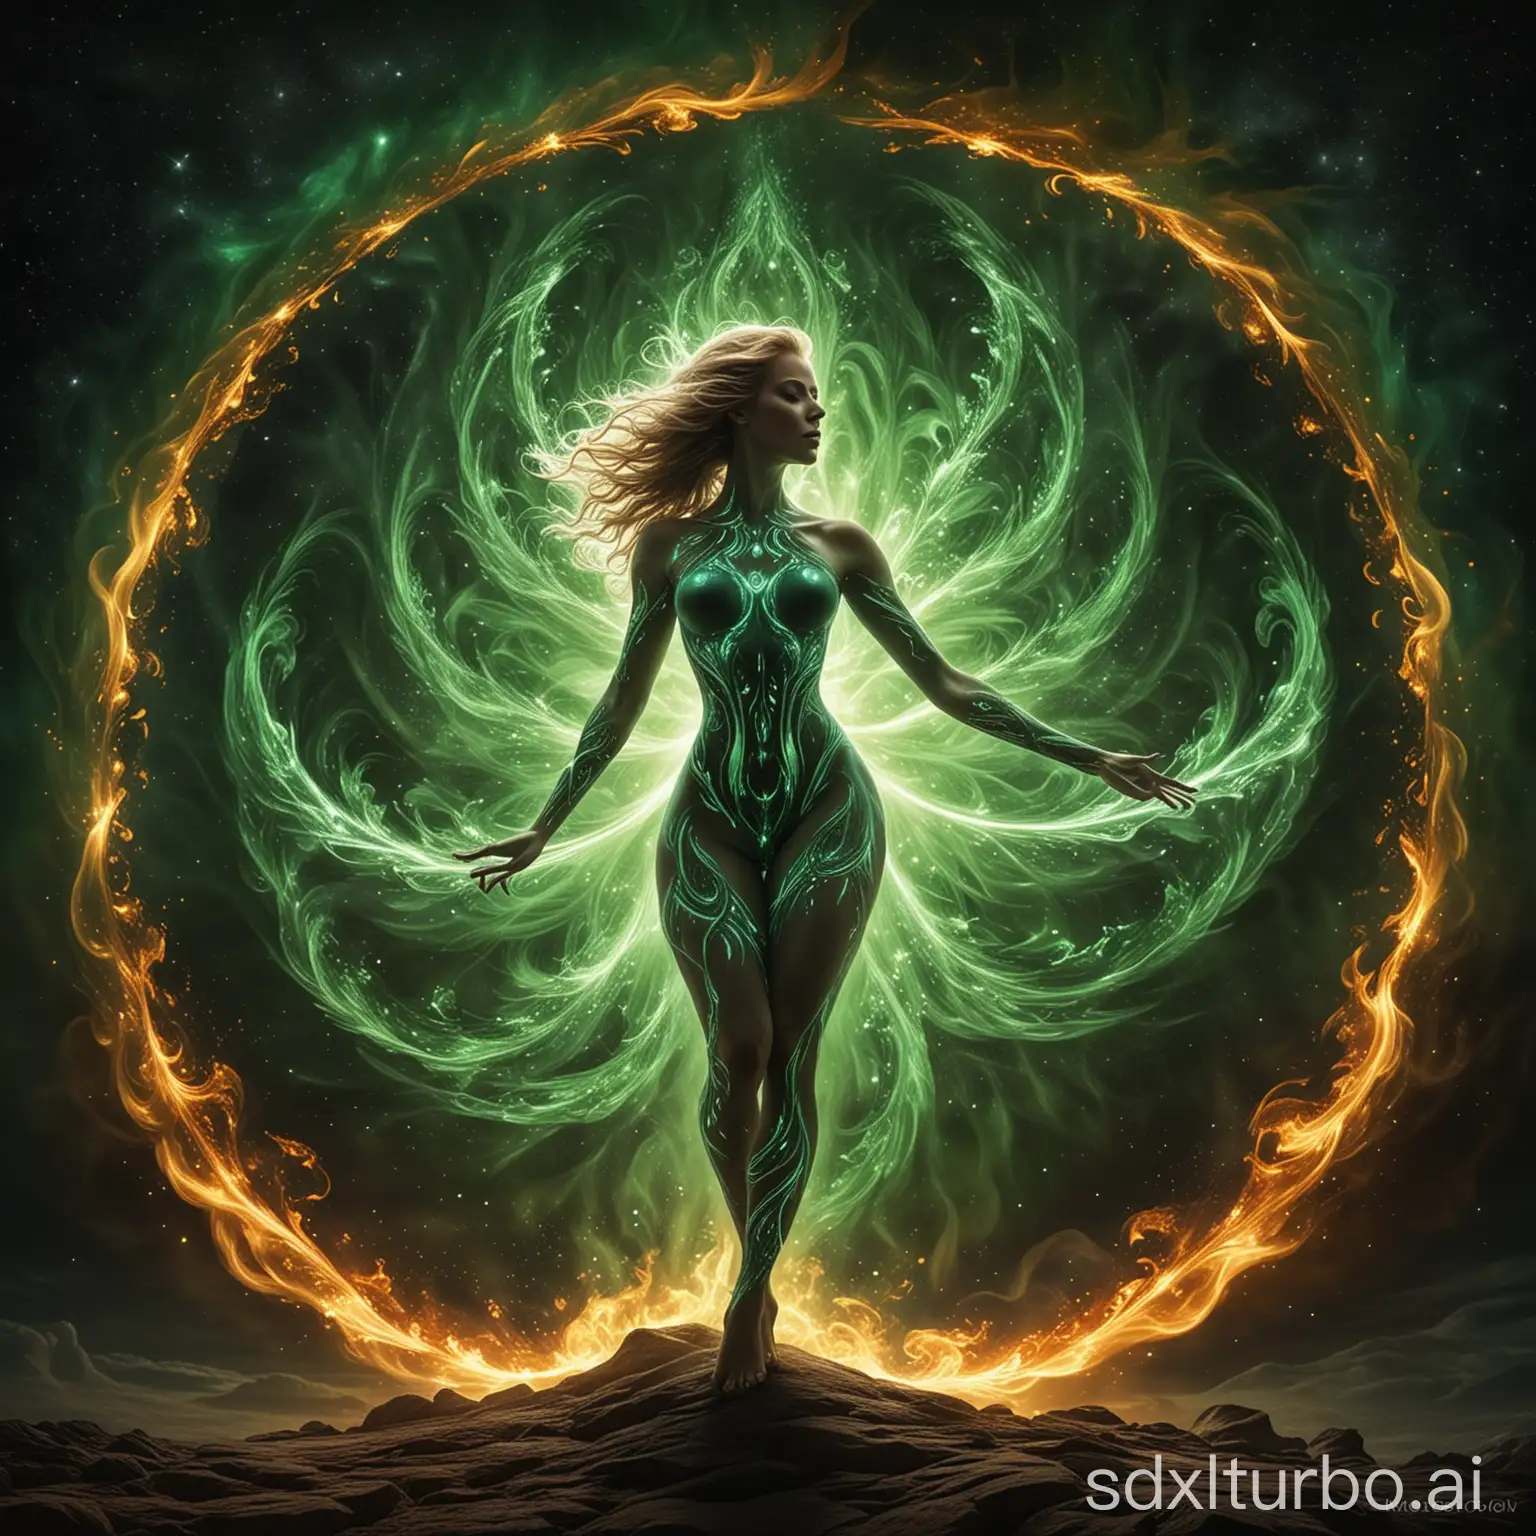 Cosmic-Dancer-Amid-Fractal-Flames-Mesmerizing-Green-Aurora-and-Polaris-White-Patterns